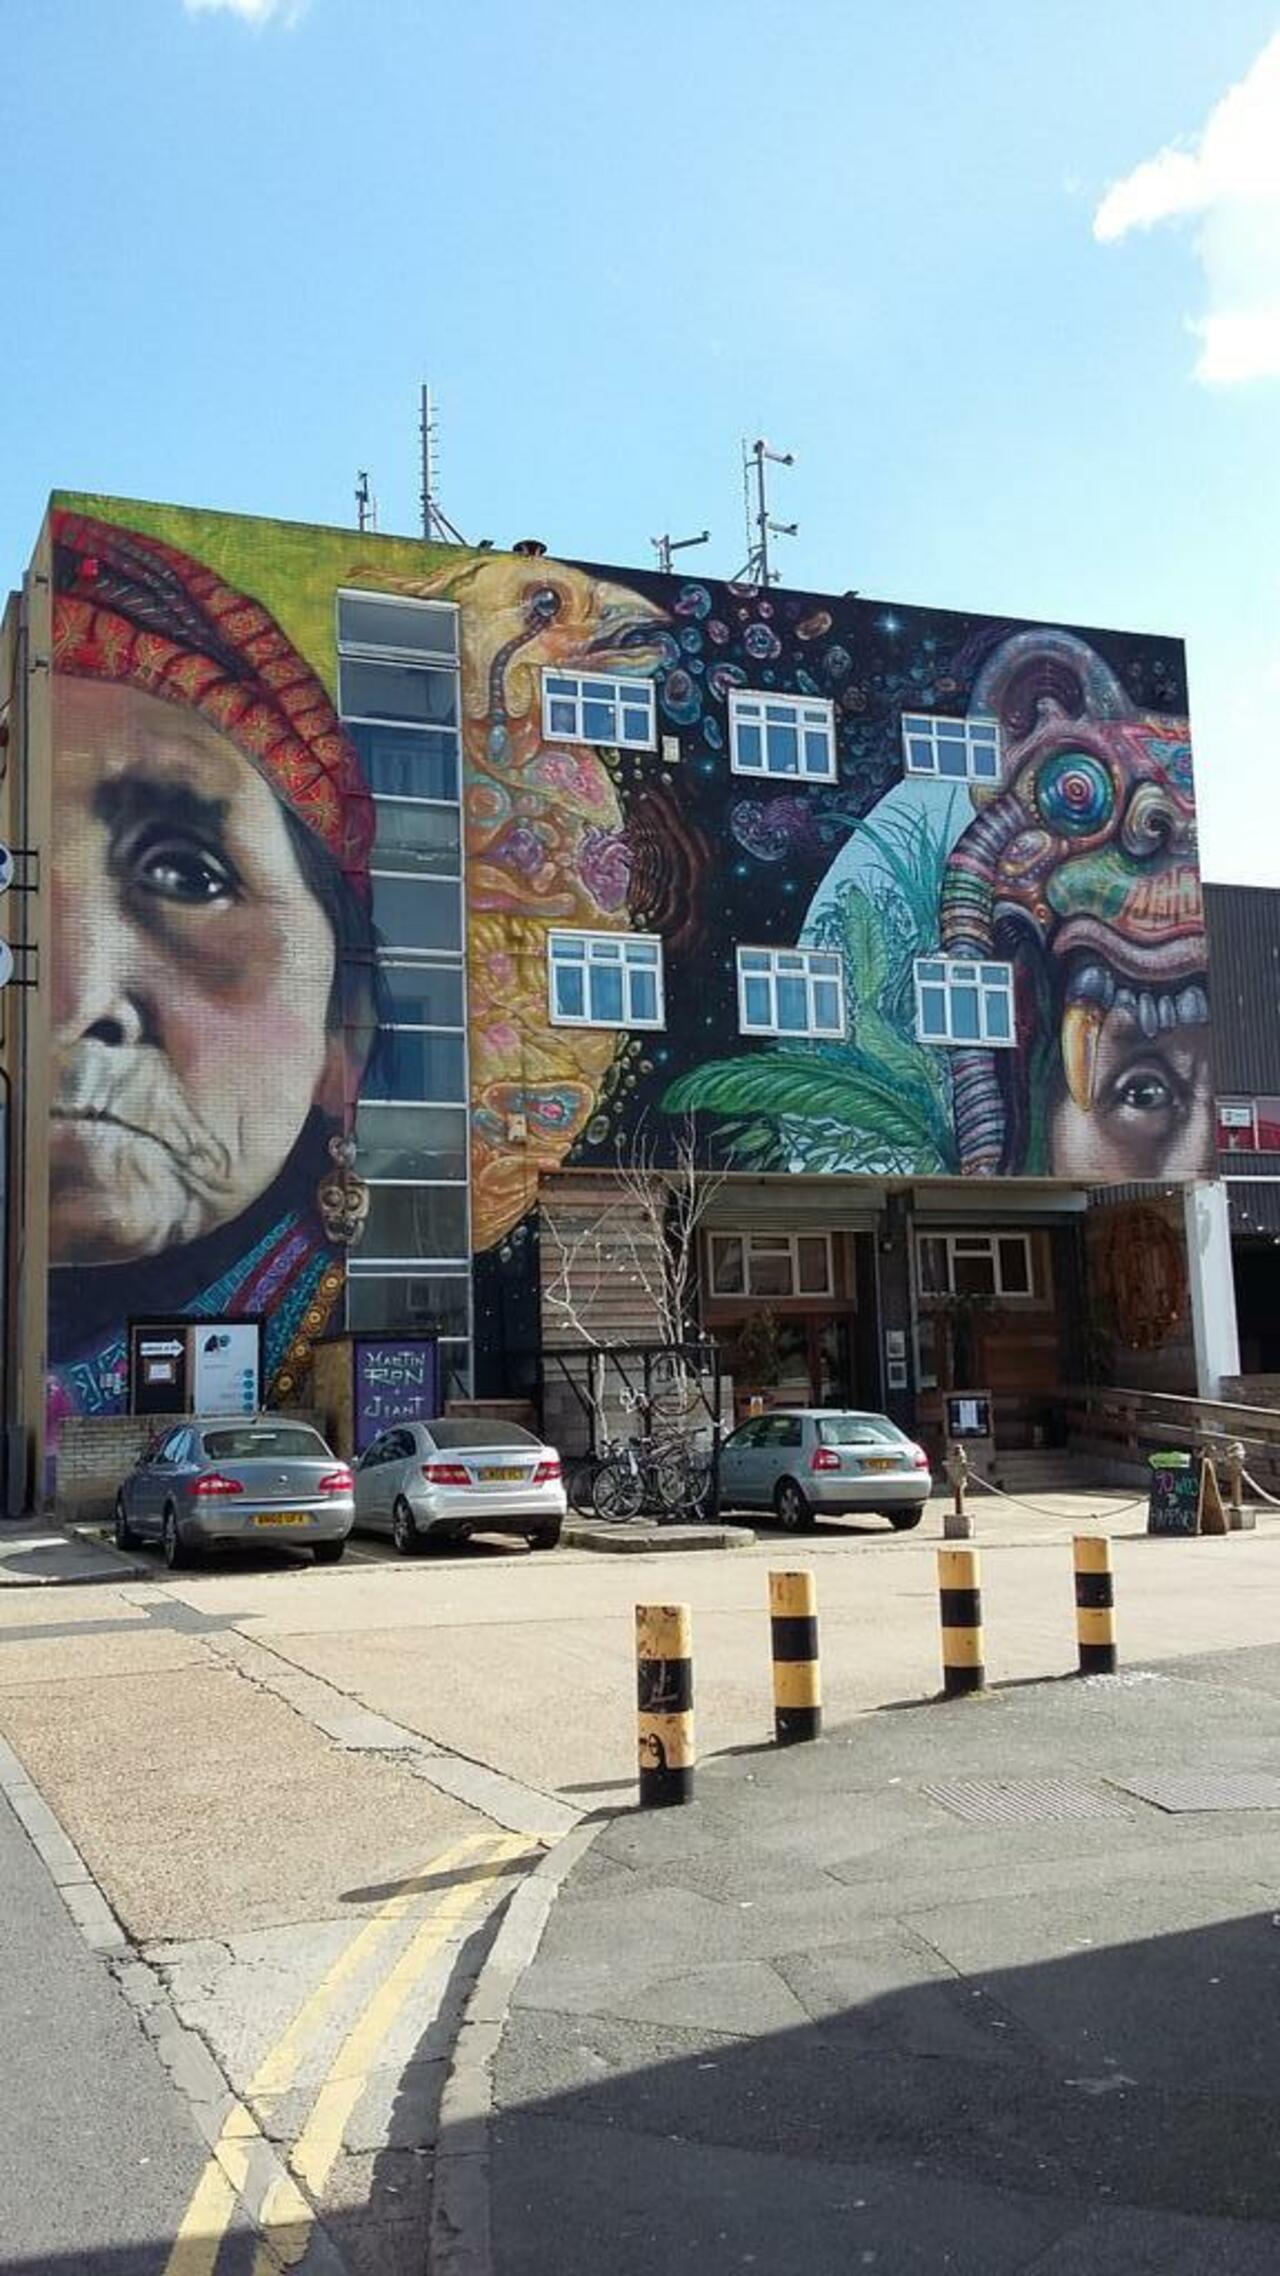 #streetart Martin Ron & Jiant in #Hackney Wick #switch #bedifferent #graffiti #arte #art http://t.co/tlDRAX0EjM